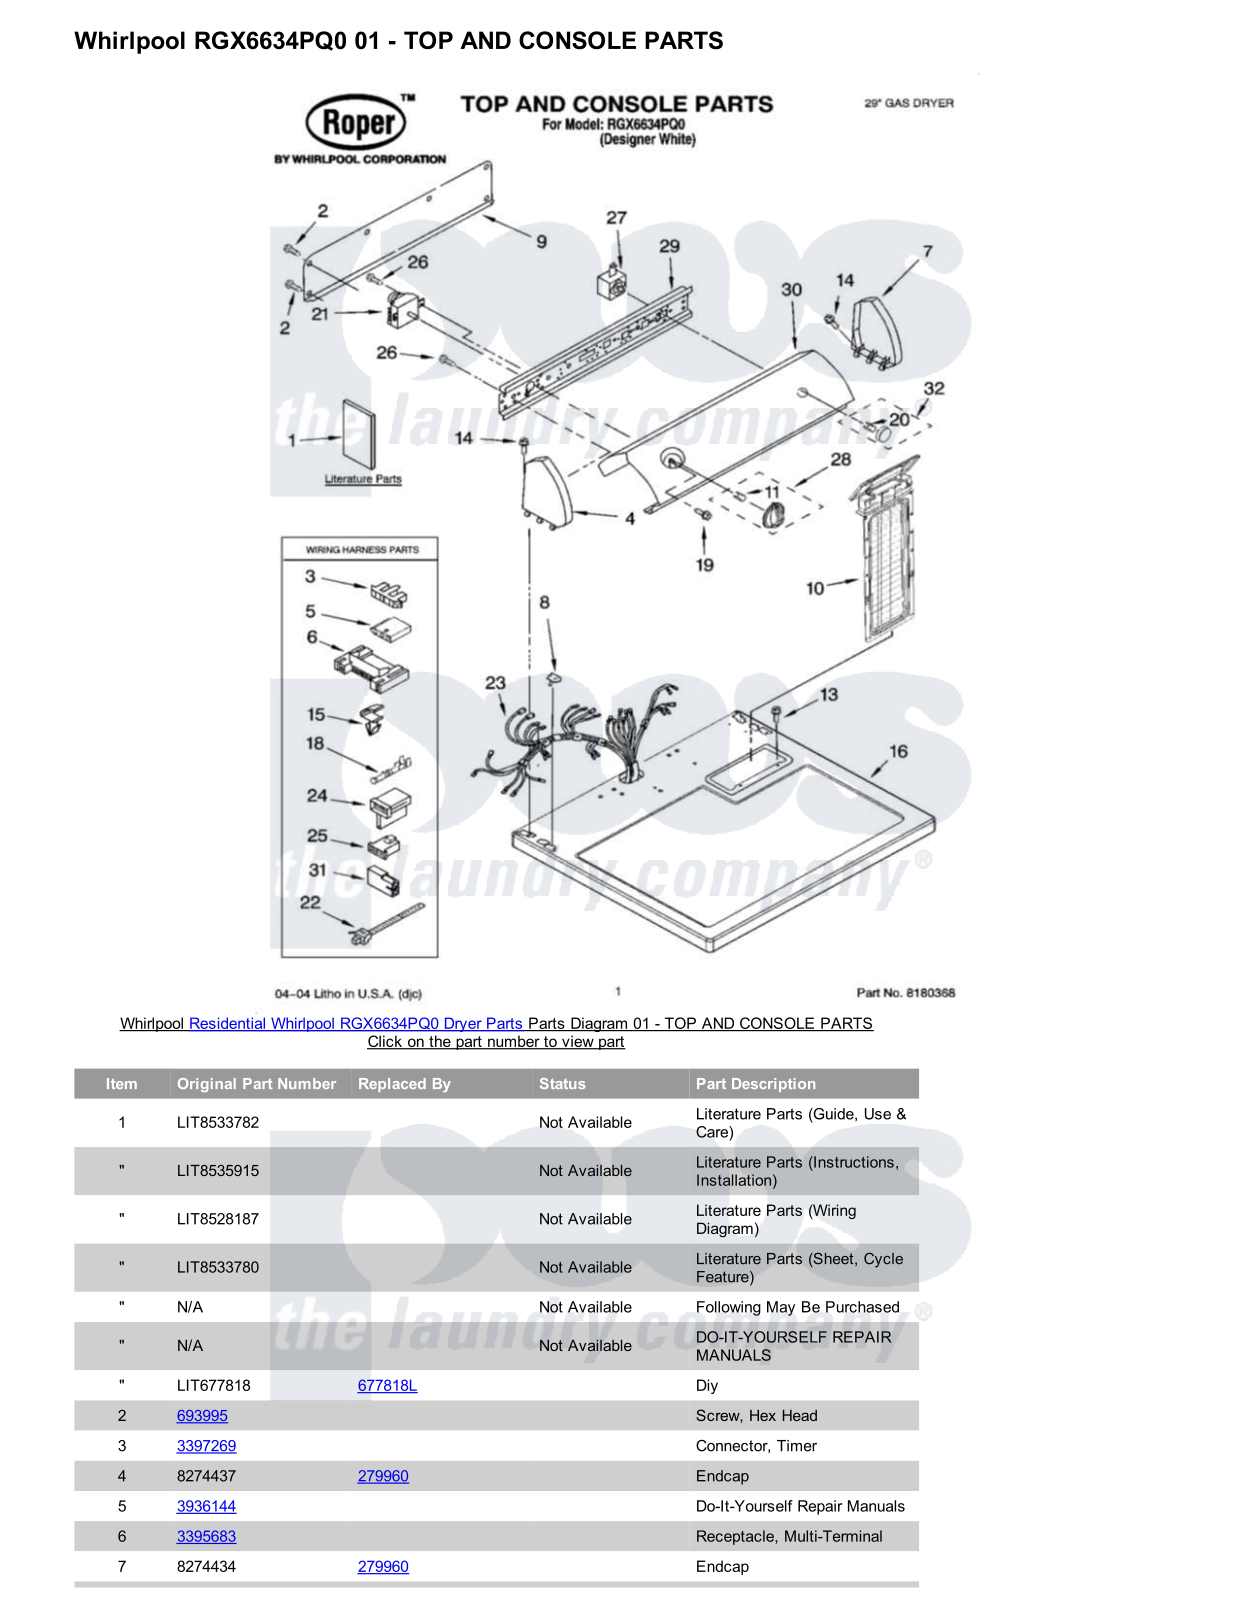 Whirlpool RGX6634PQ0 Parts Diagram